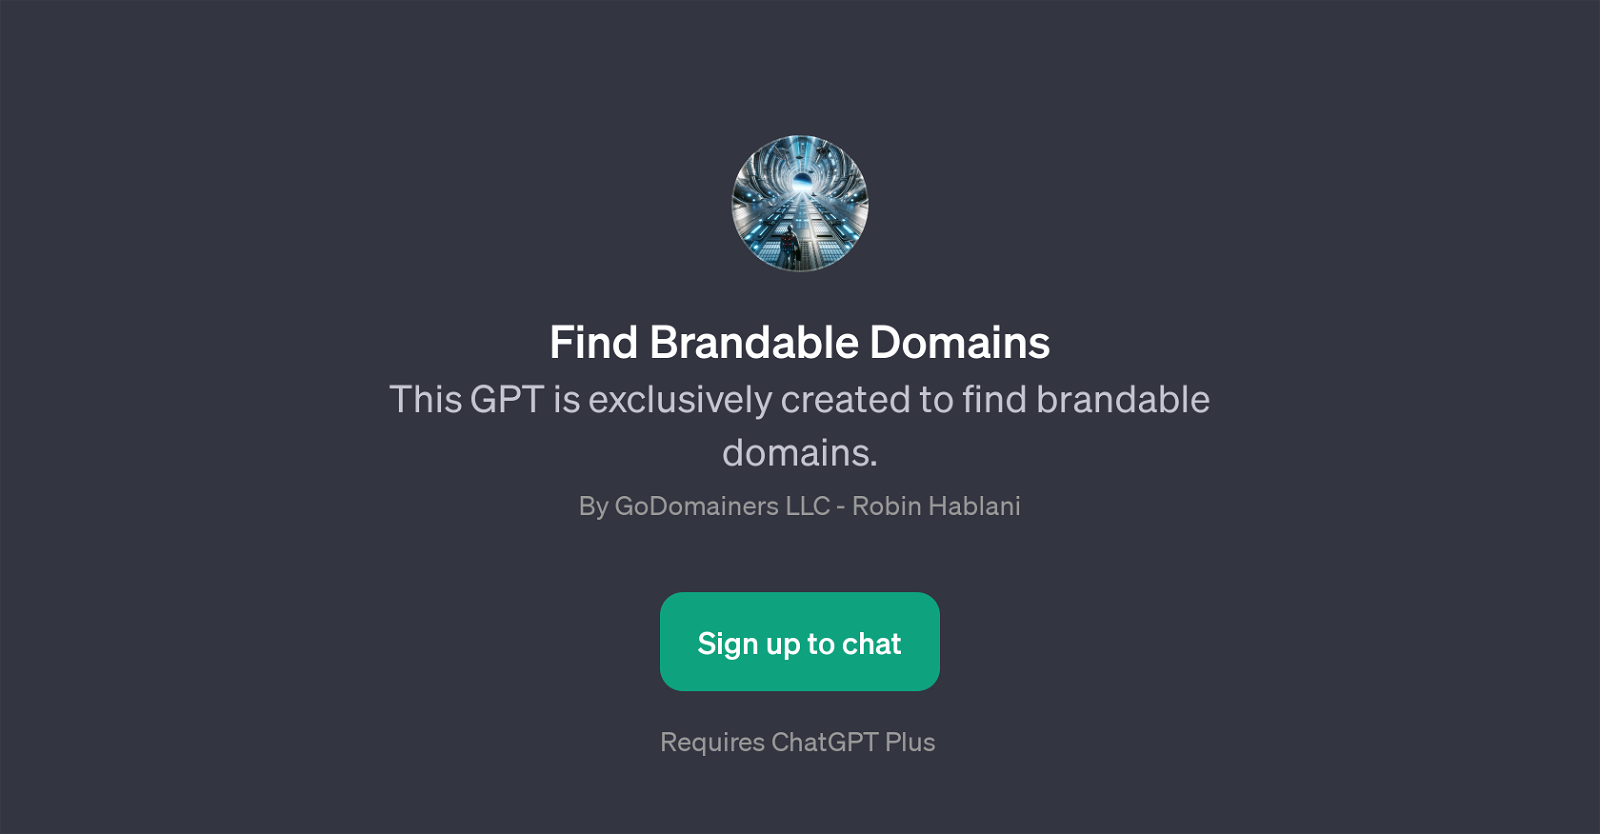 Find Brandable Domains website